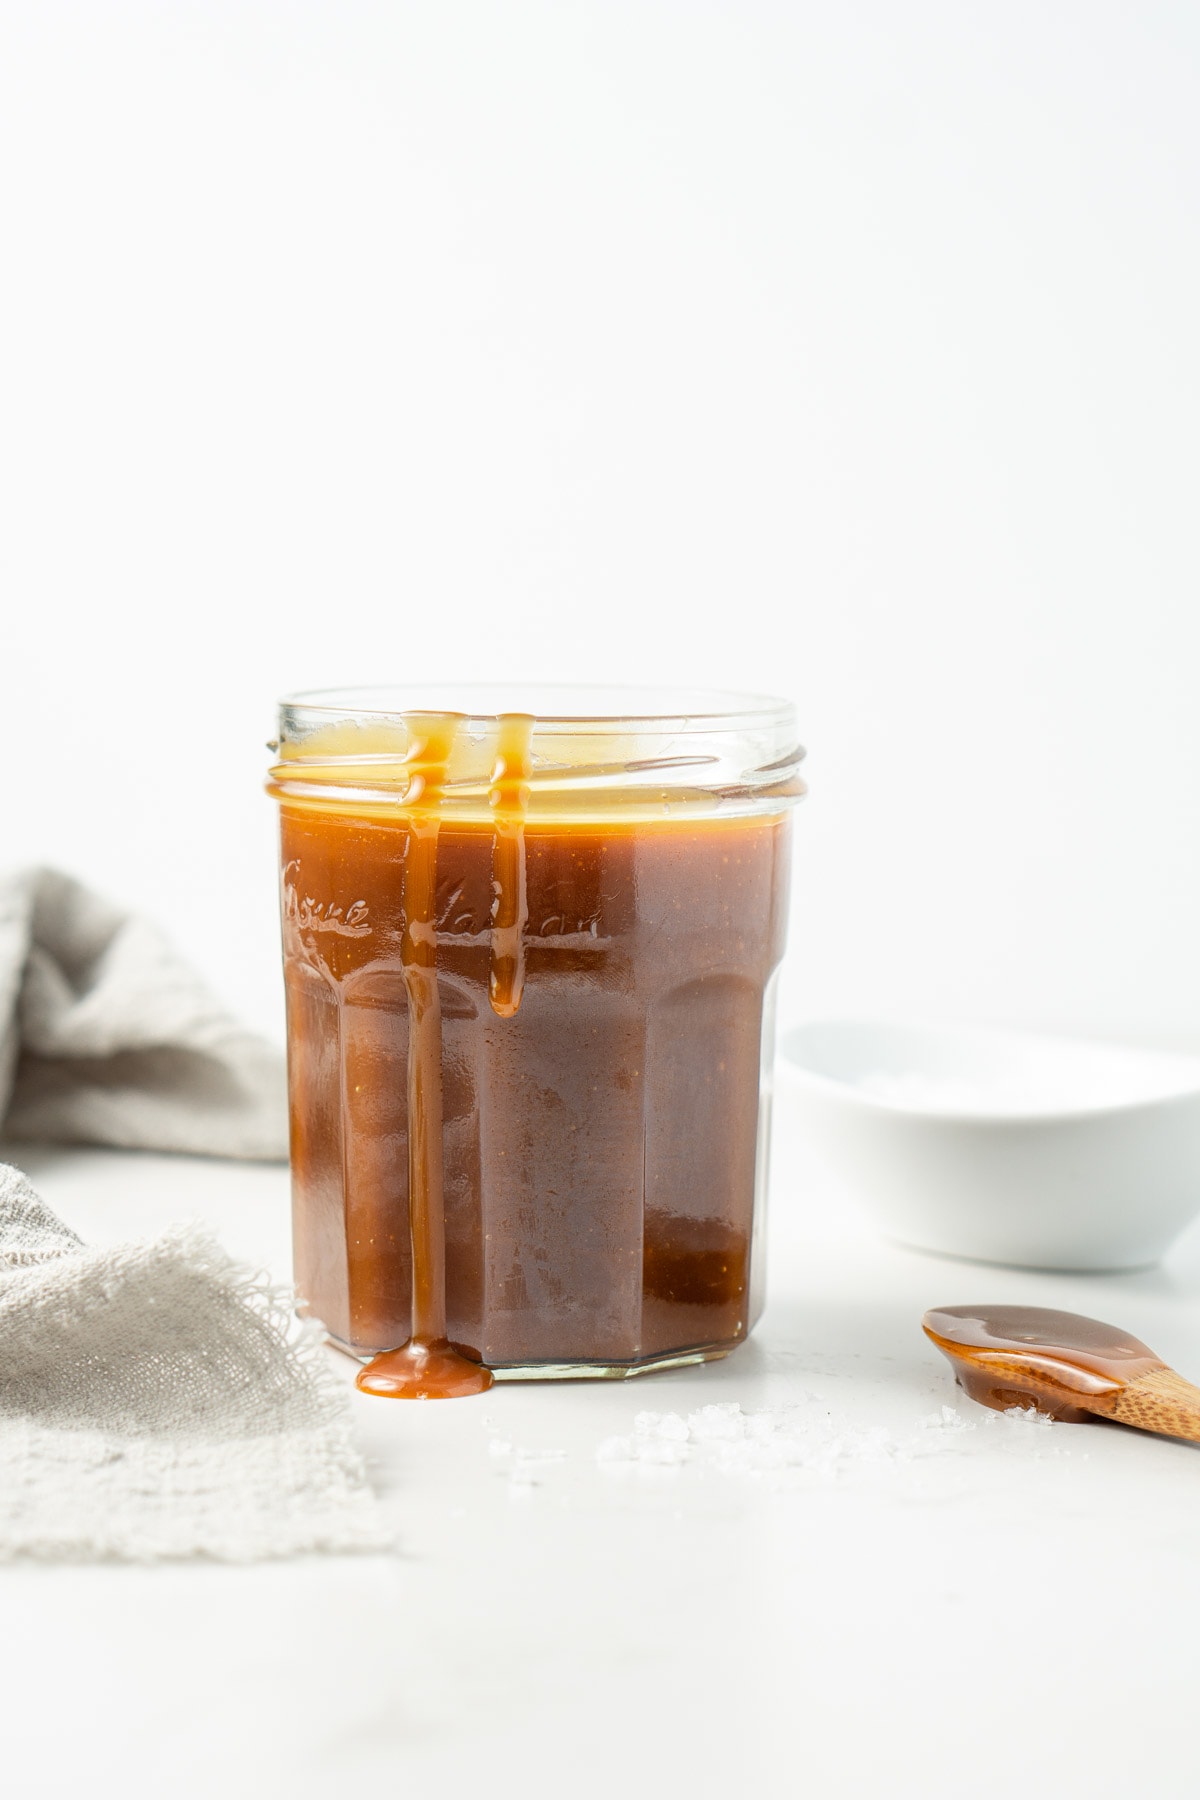 salted caramel sauce in a glass jar.